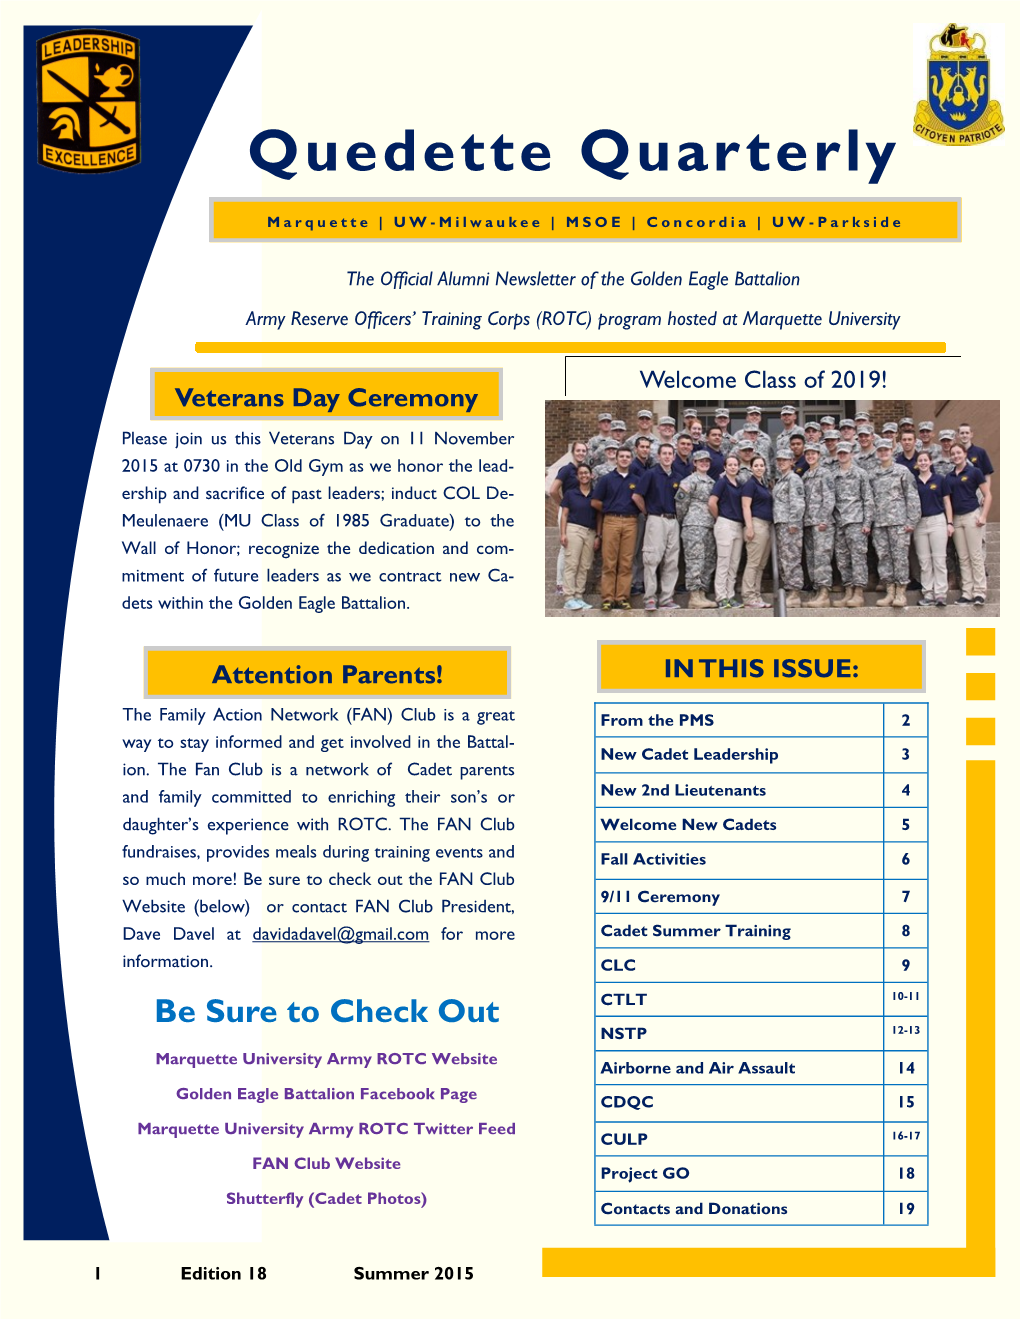 Quedette Quarterly Marquette | UW - Milwaukee | MSOE | Concordia | UW - P a R K S I D E